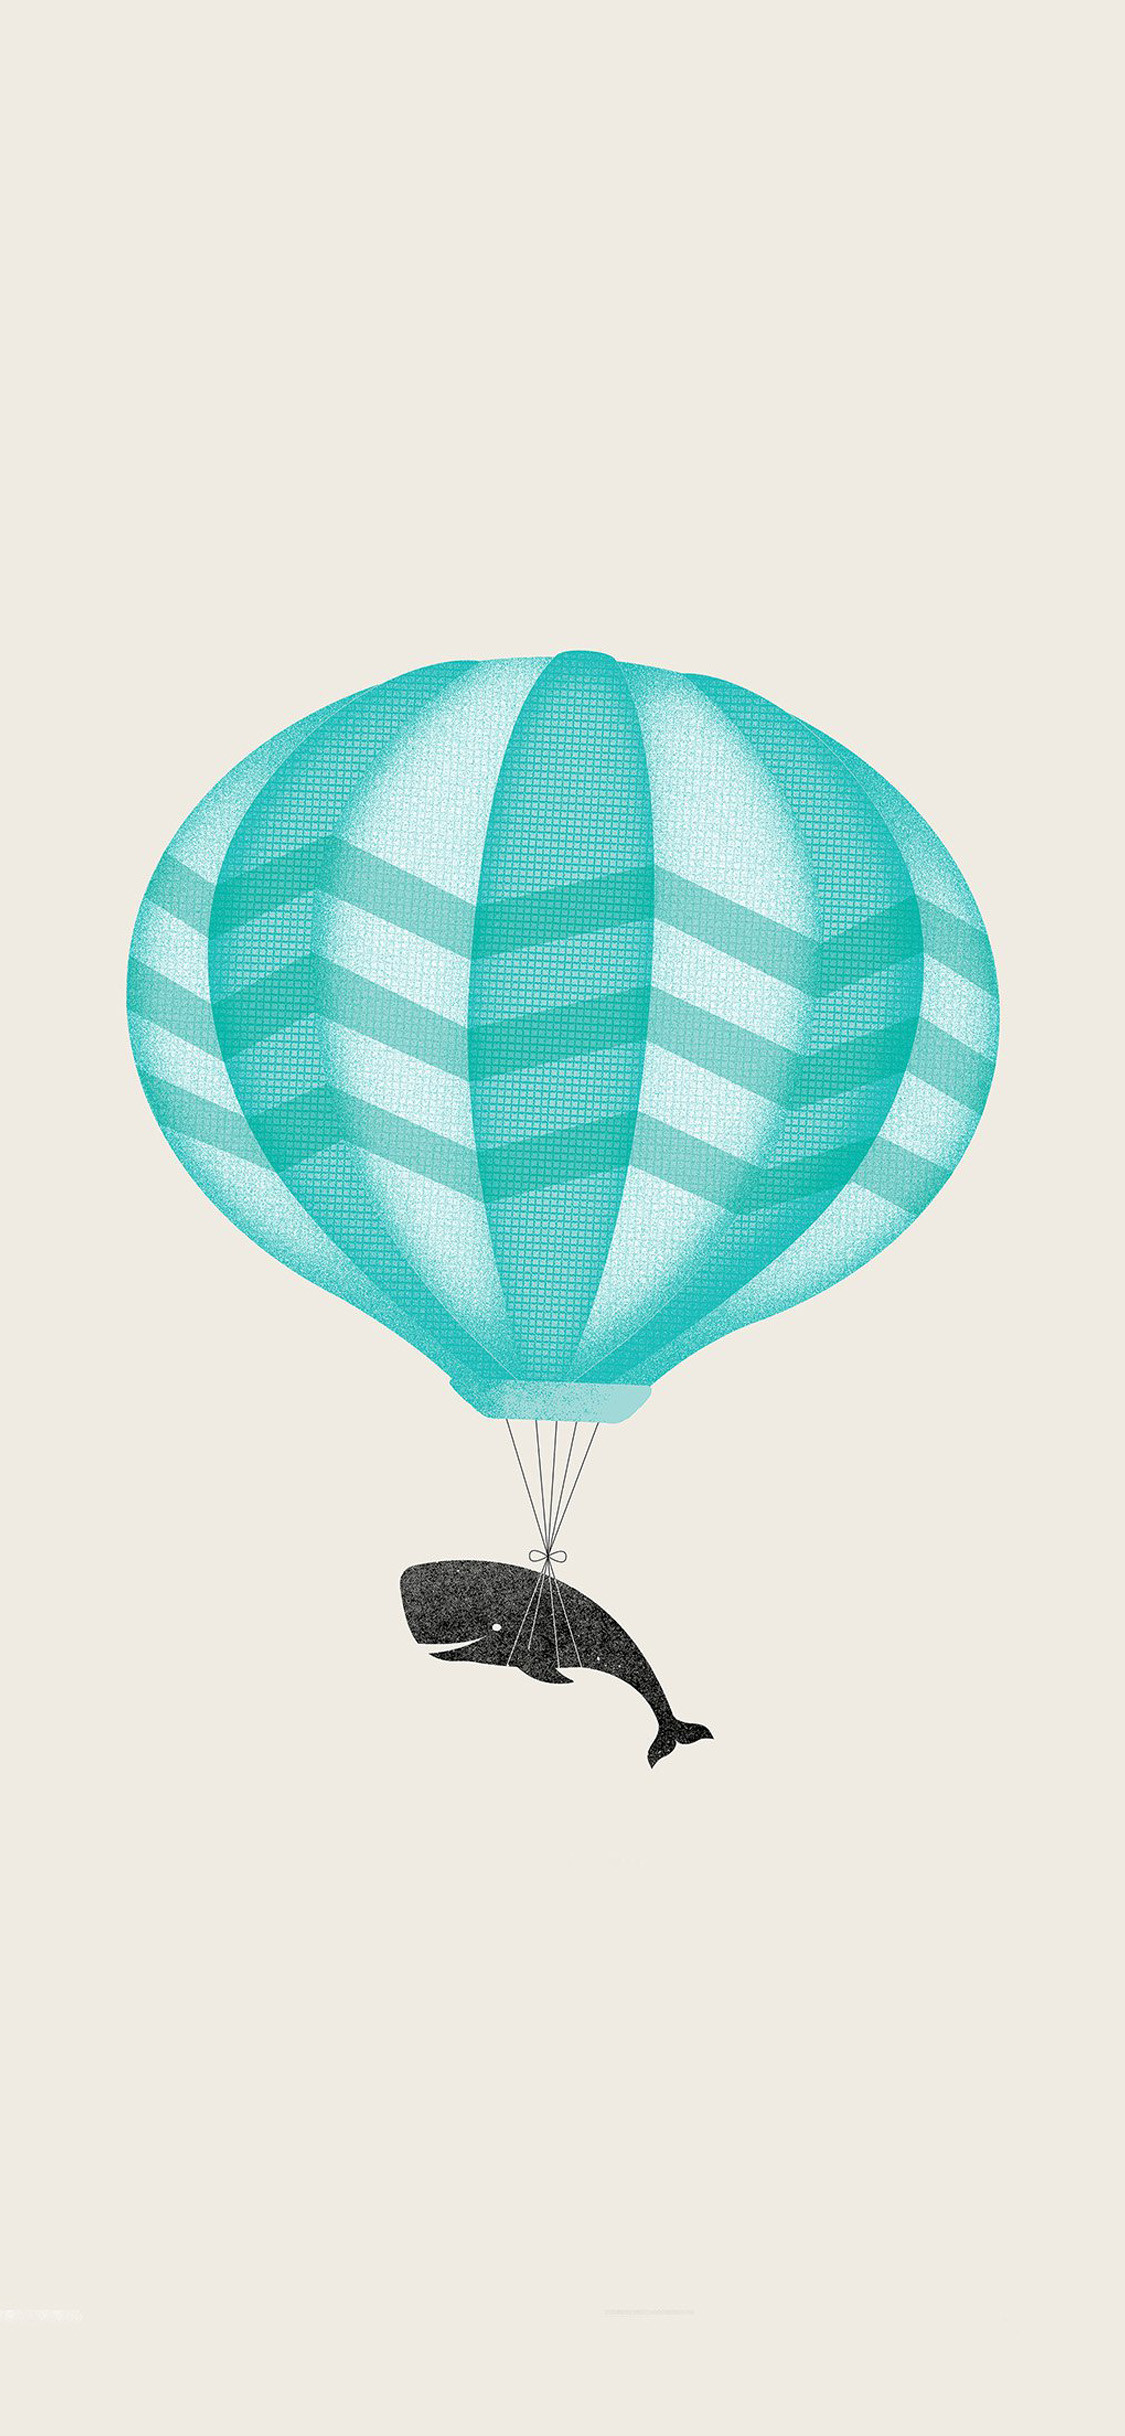 1125x2436 Cute whale balloon illustration iPhone 8 Wallpaper